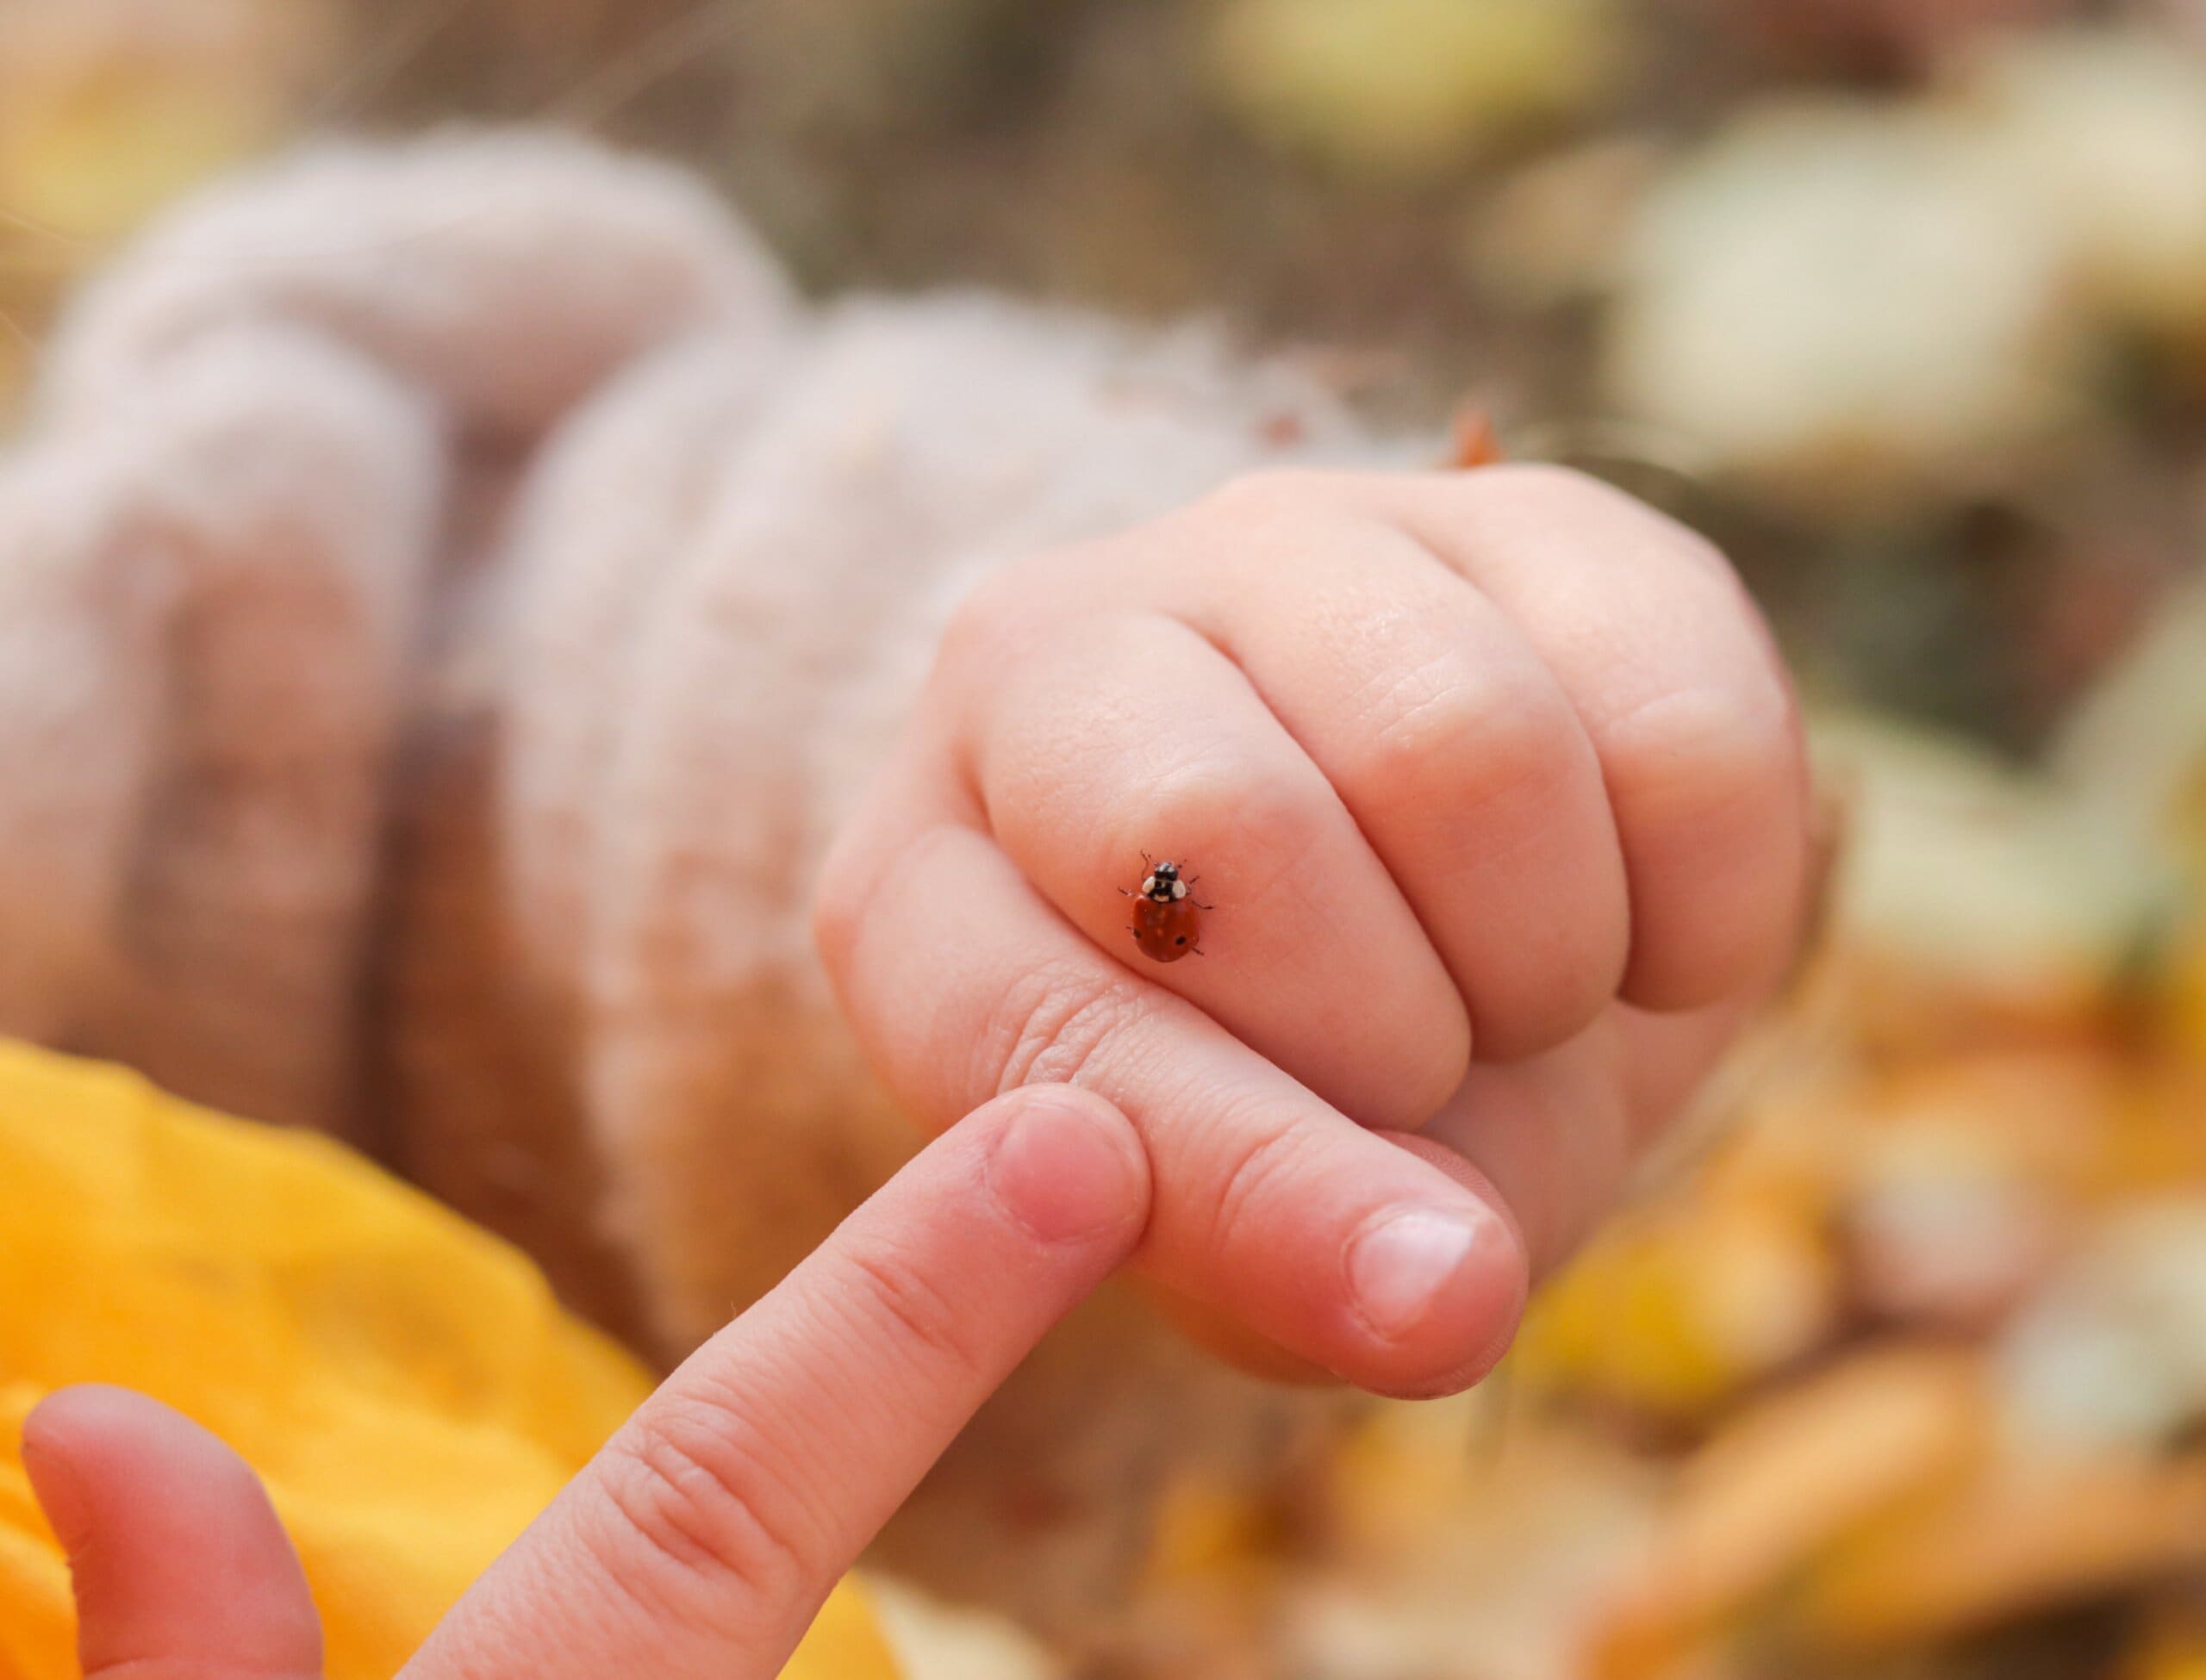 Close-up of ladybug on child's hand on a blurred backround.